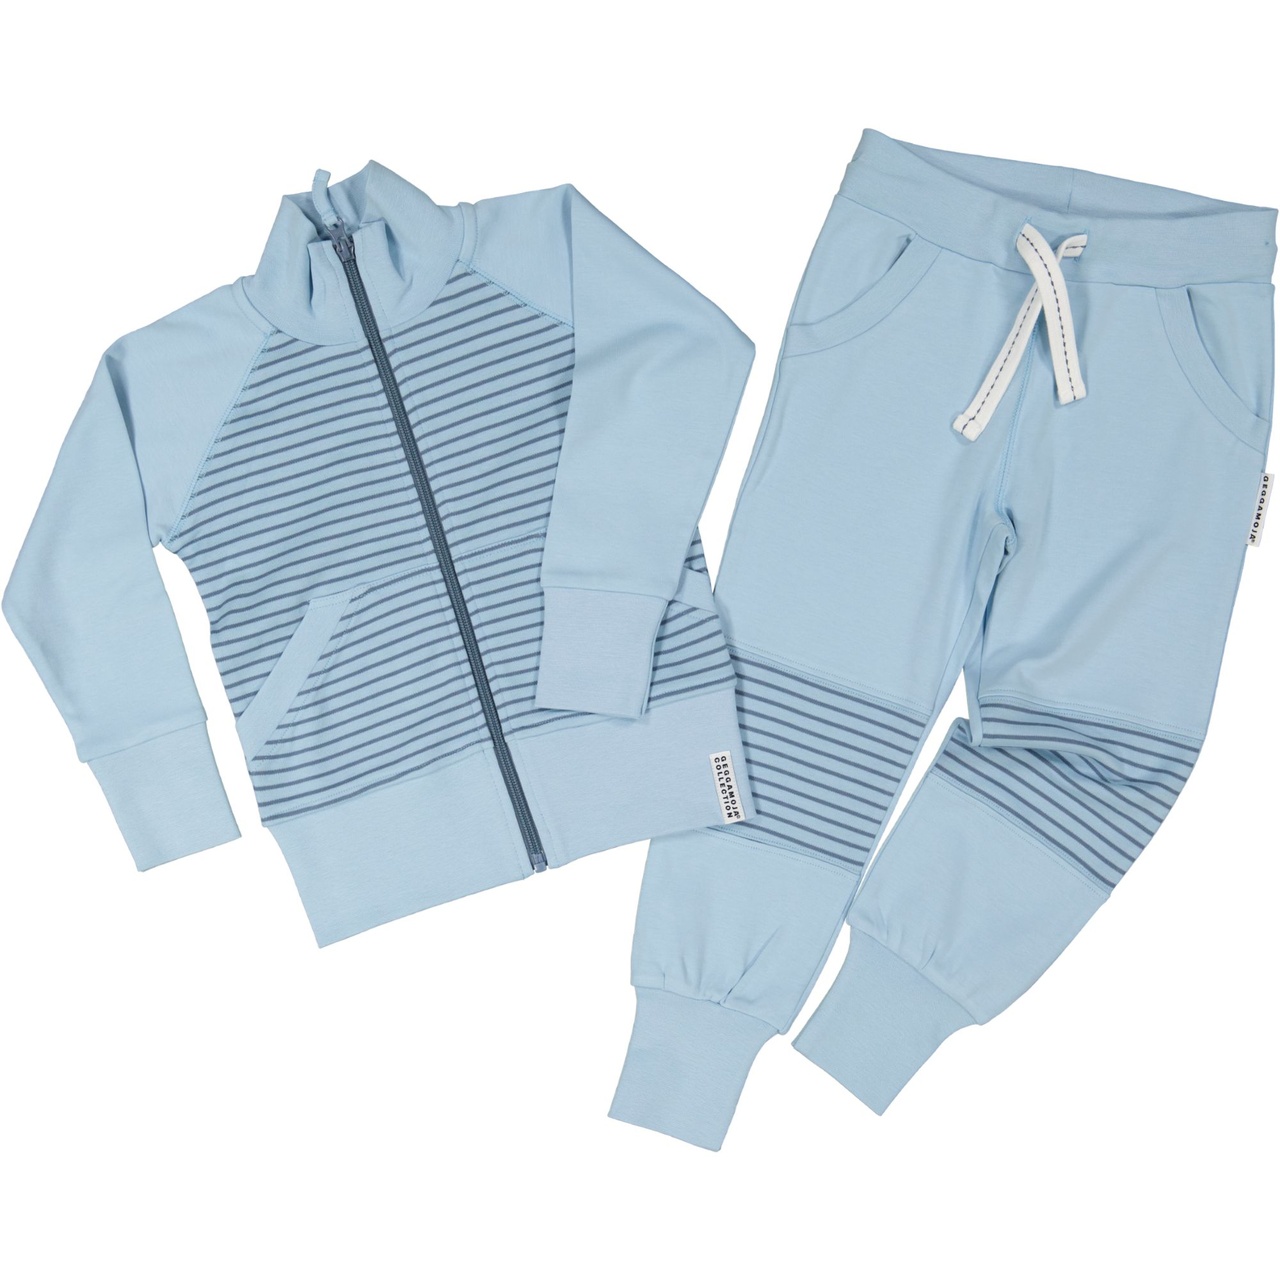 Zip sweater L.blue/blue146/152